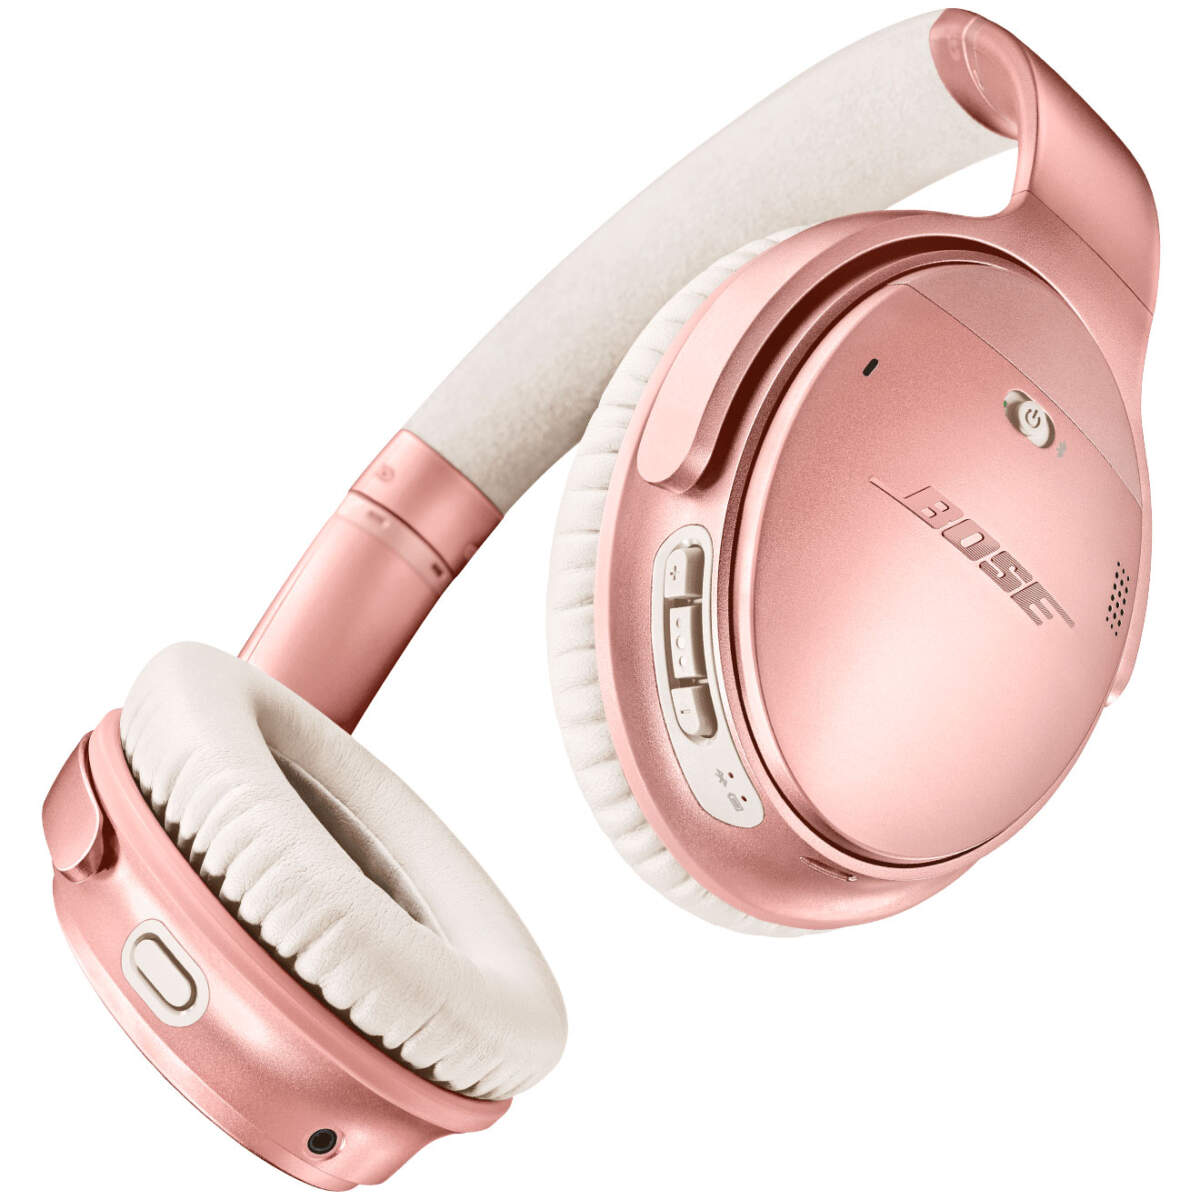 Bose QuietComfort 35 II Wireless Noise Cancelling Headphones (Rose Gold)